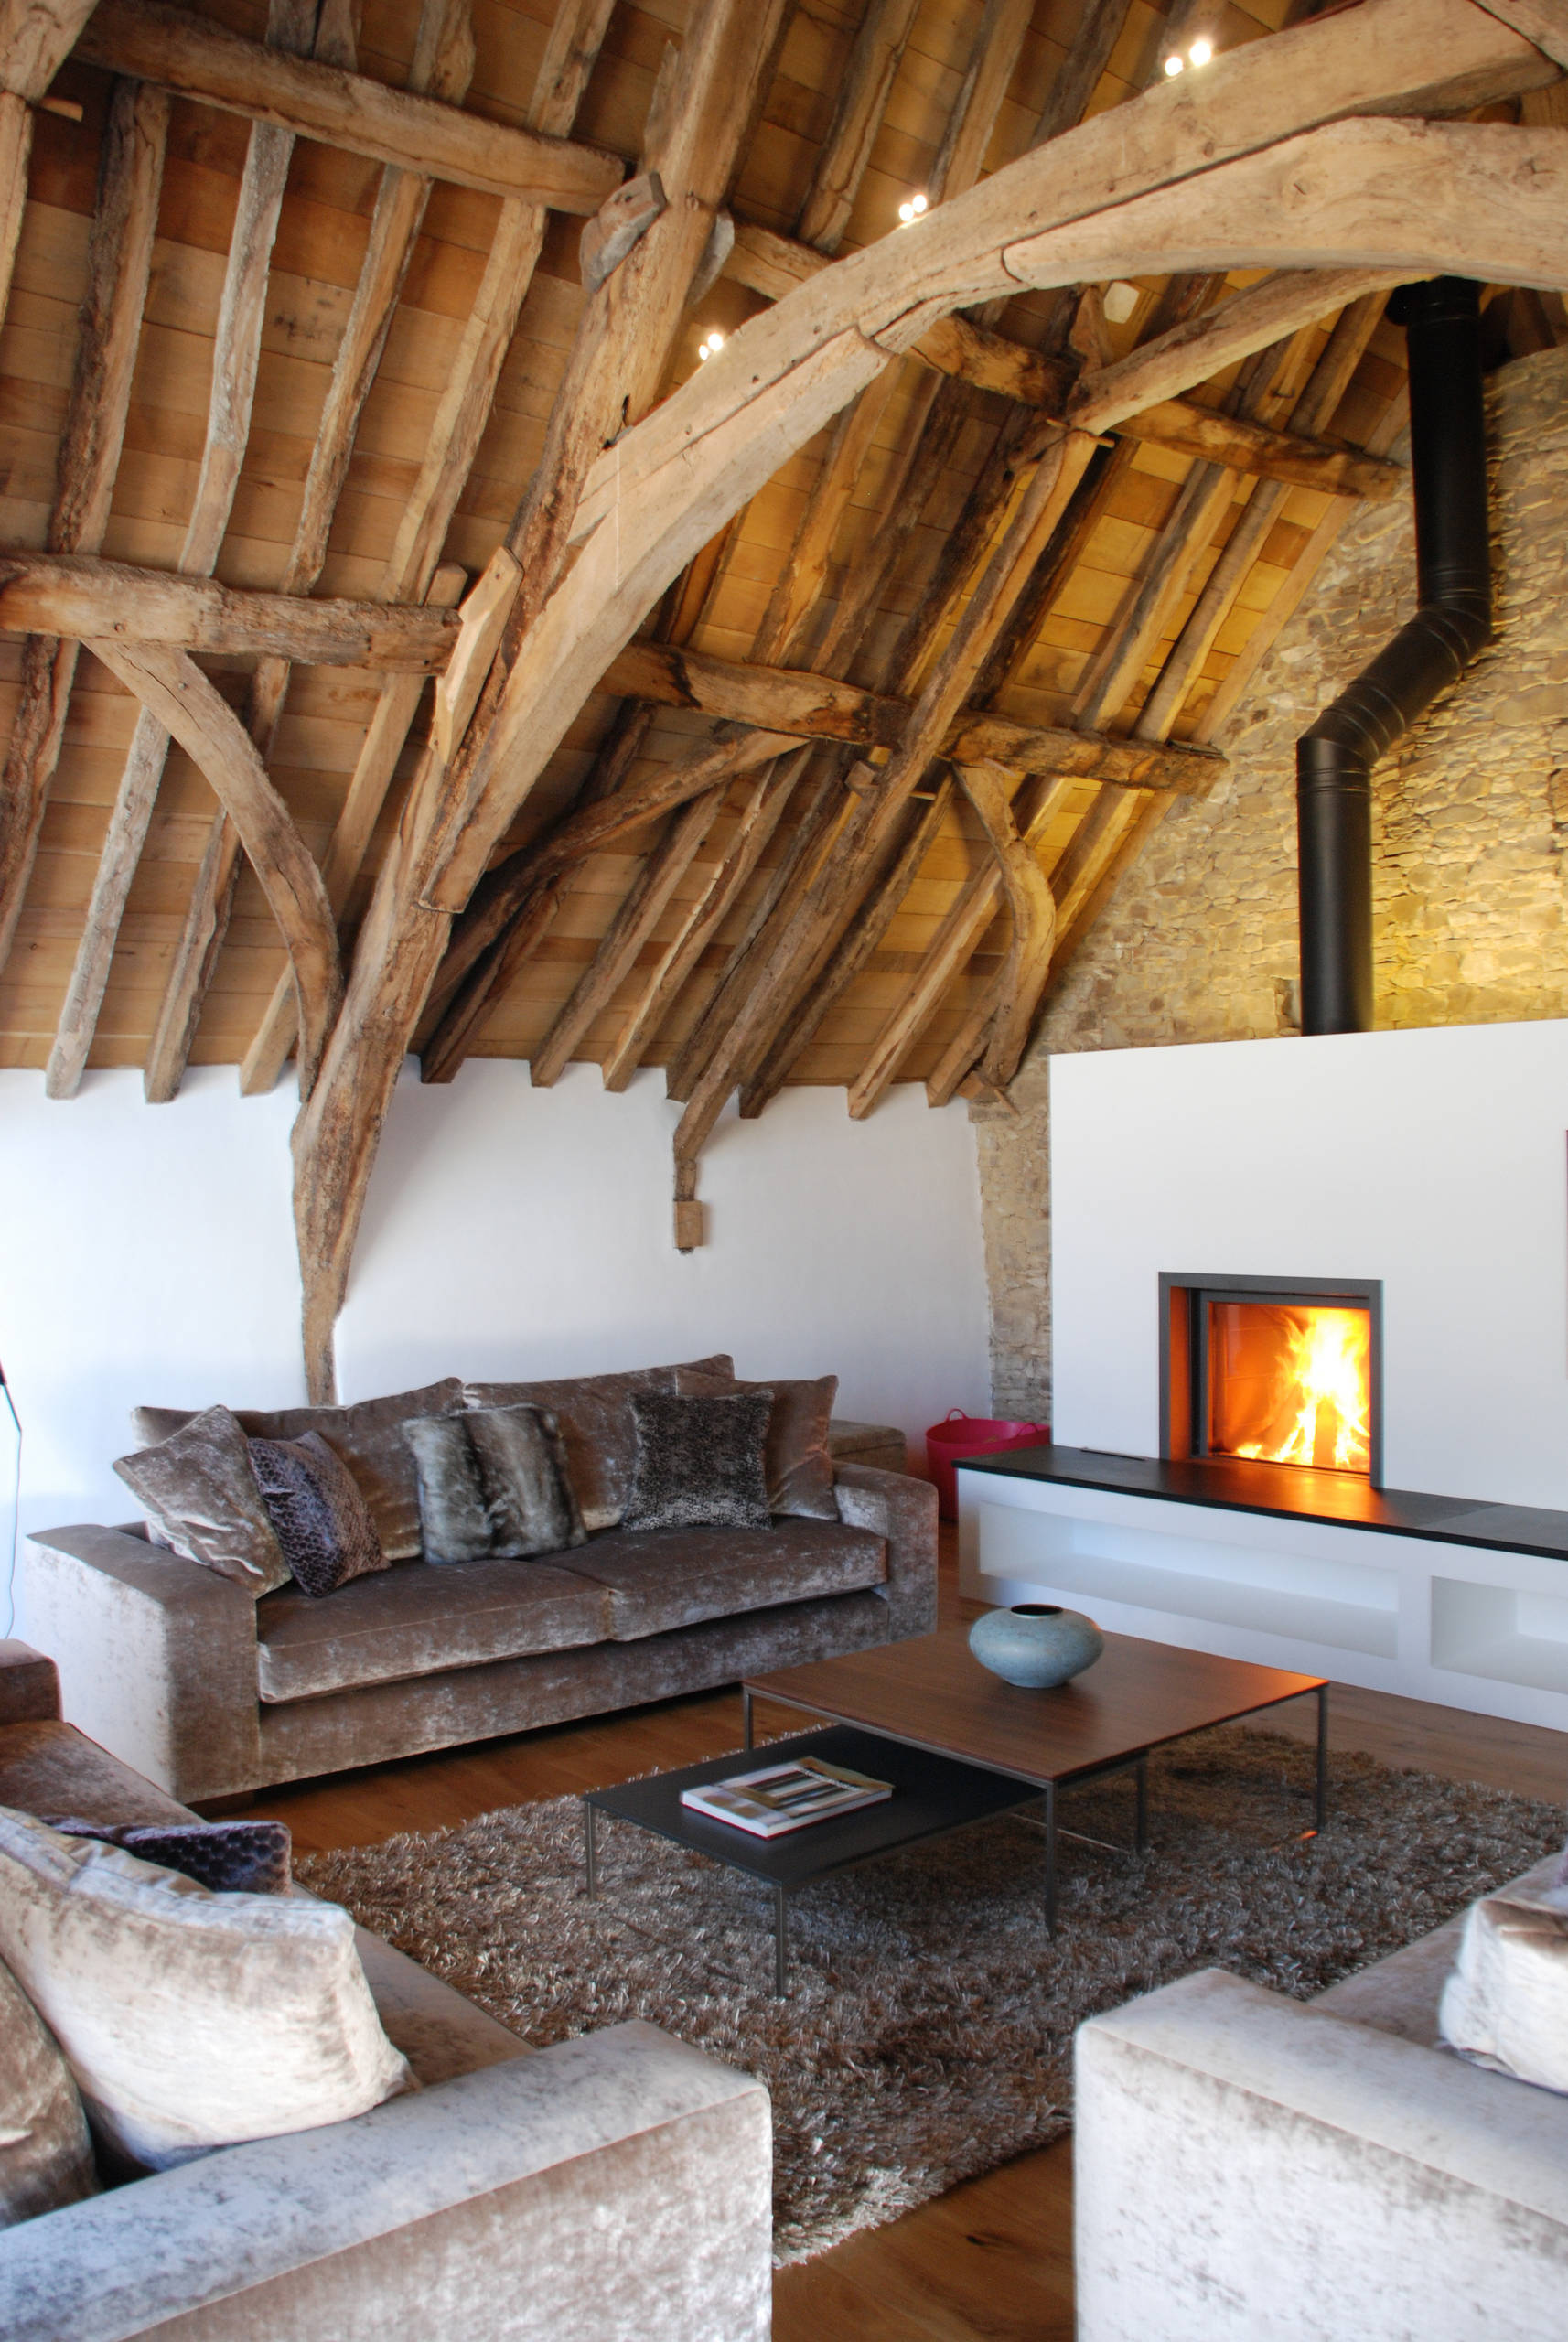 Medieval Living Room - Photos & Ideas